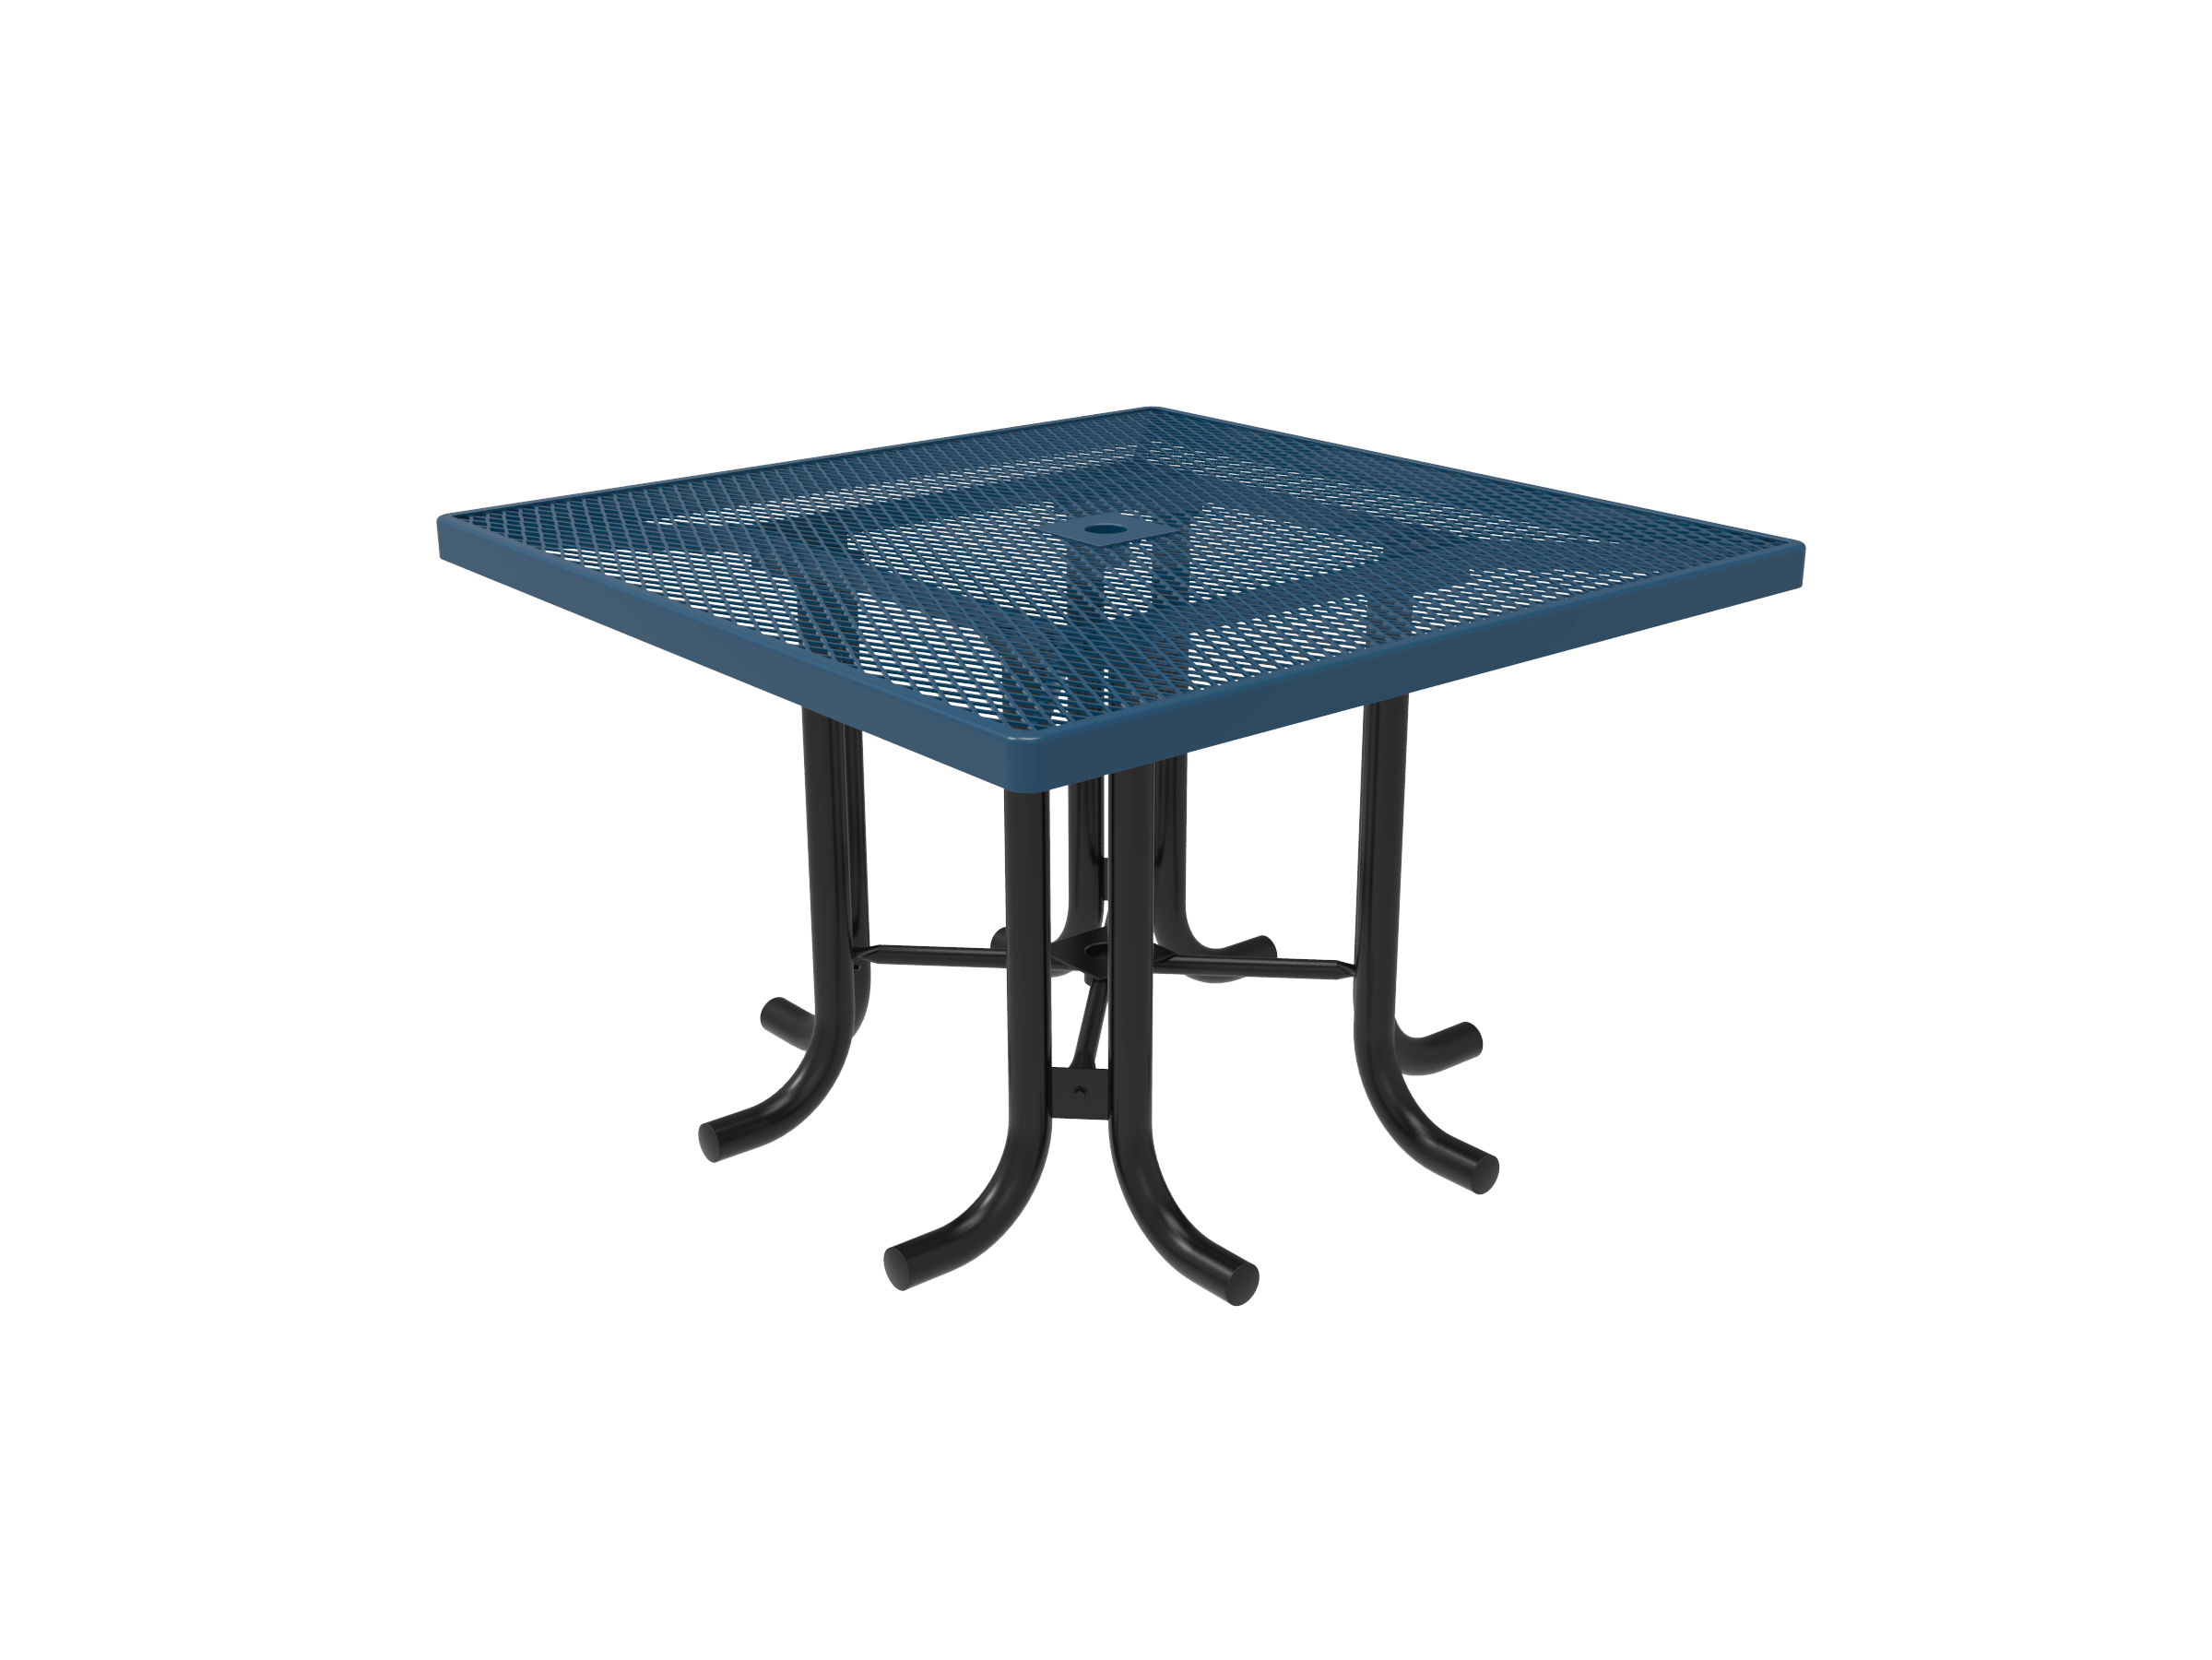 46″ Square Table-Mesh
TPS46-C-66-000
Industry Standard Finish
$599.00
TPS46-A-66-000
Advantage Premium Finish
$749.00
